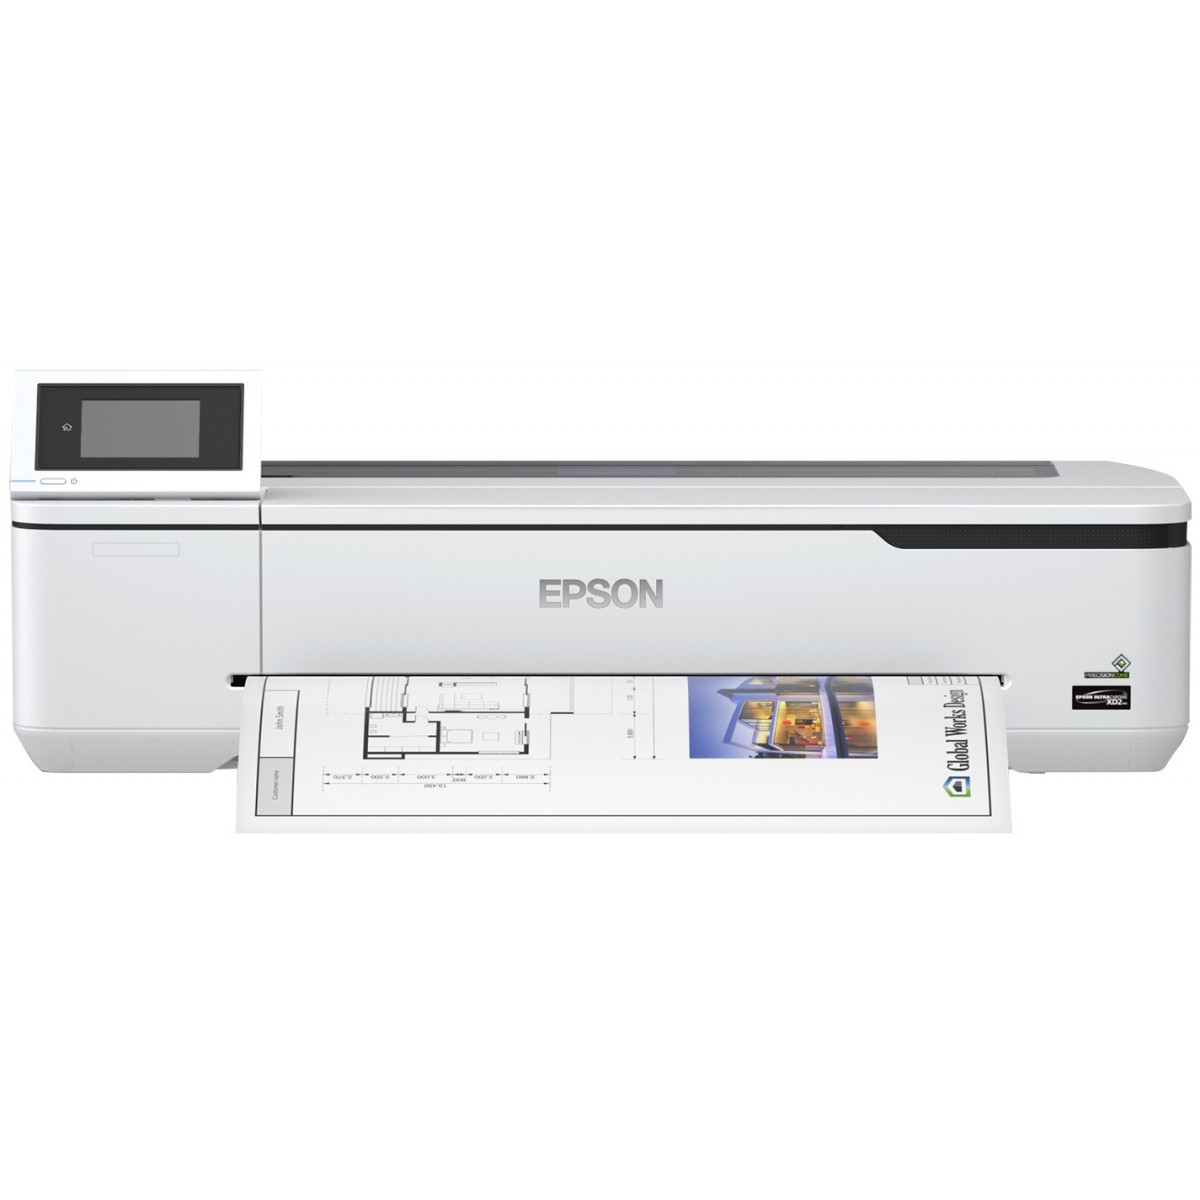 Epson SureColor SC-T2100 - Inkjet - 2400 x 1200 DPI - ESC/P-R,HP-GL/2,HP-RTL,TIFF,JPEG - Pigment matte black - Pigment cyan - Pi